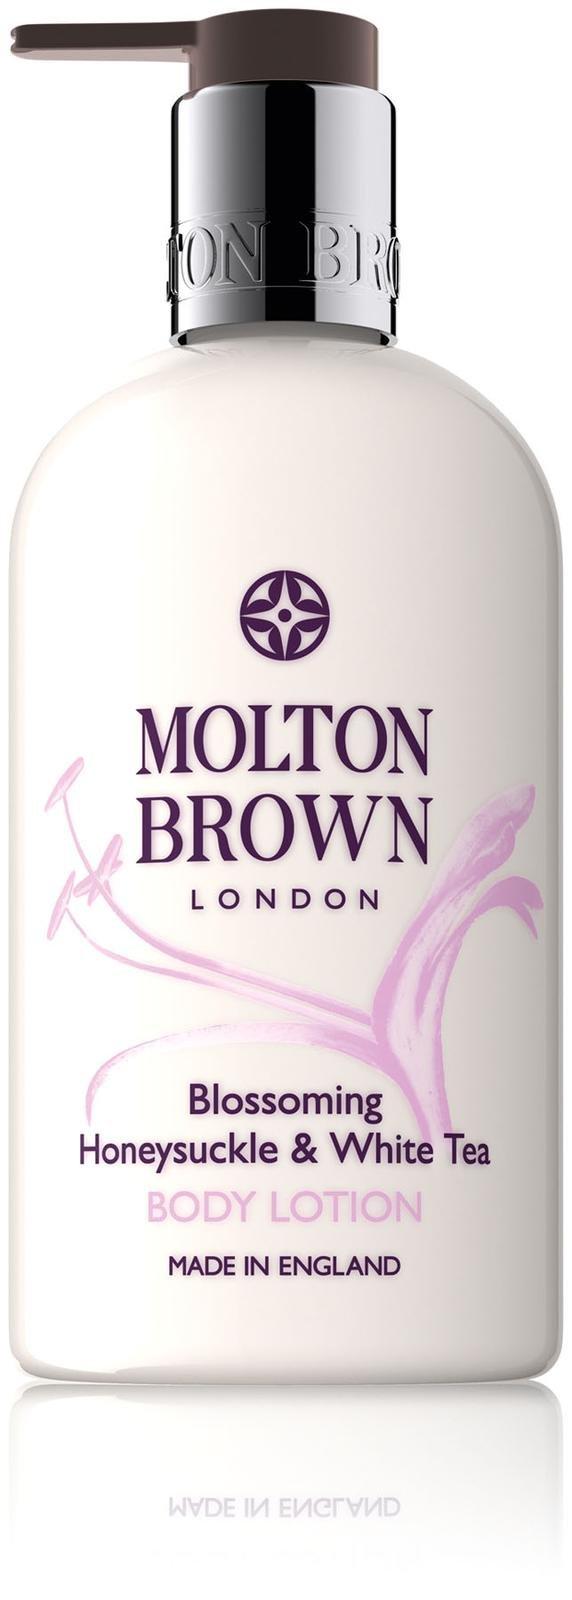 Molton Brown Body Lotion - Blossoming Honeysuckle & White Tea - 10 Oz